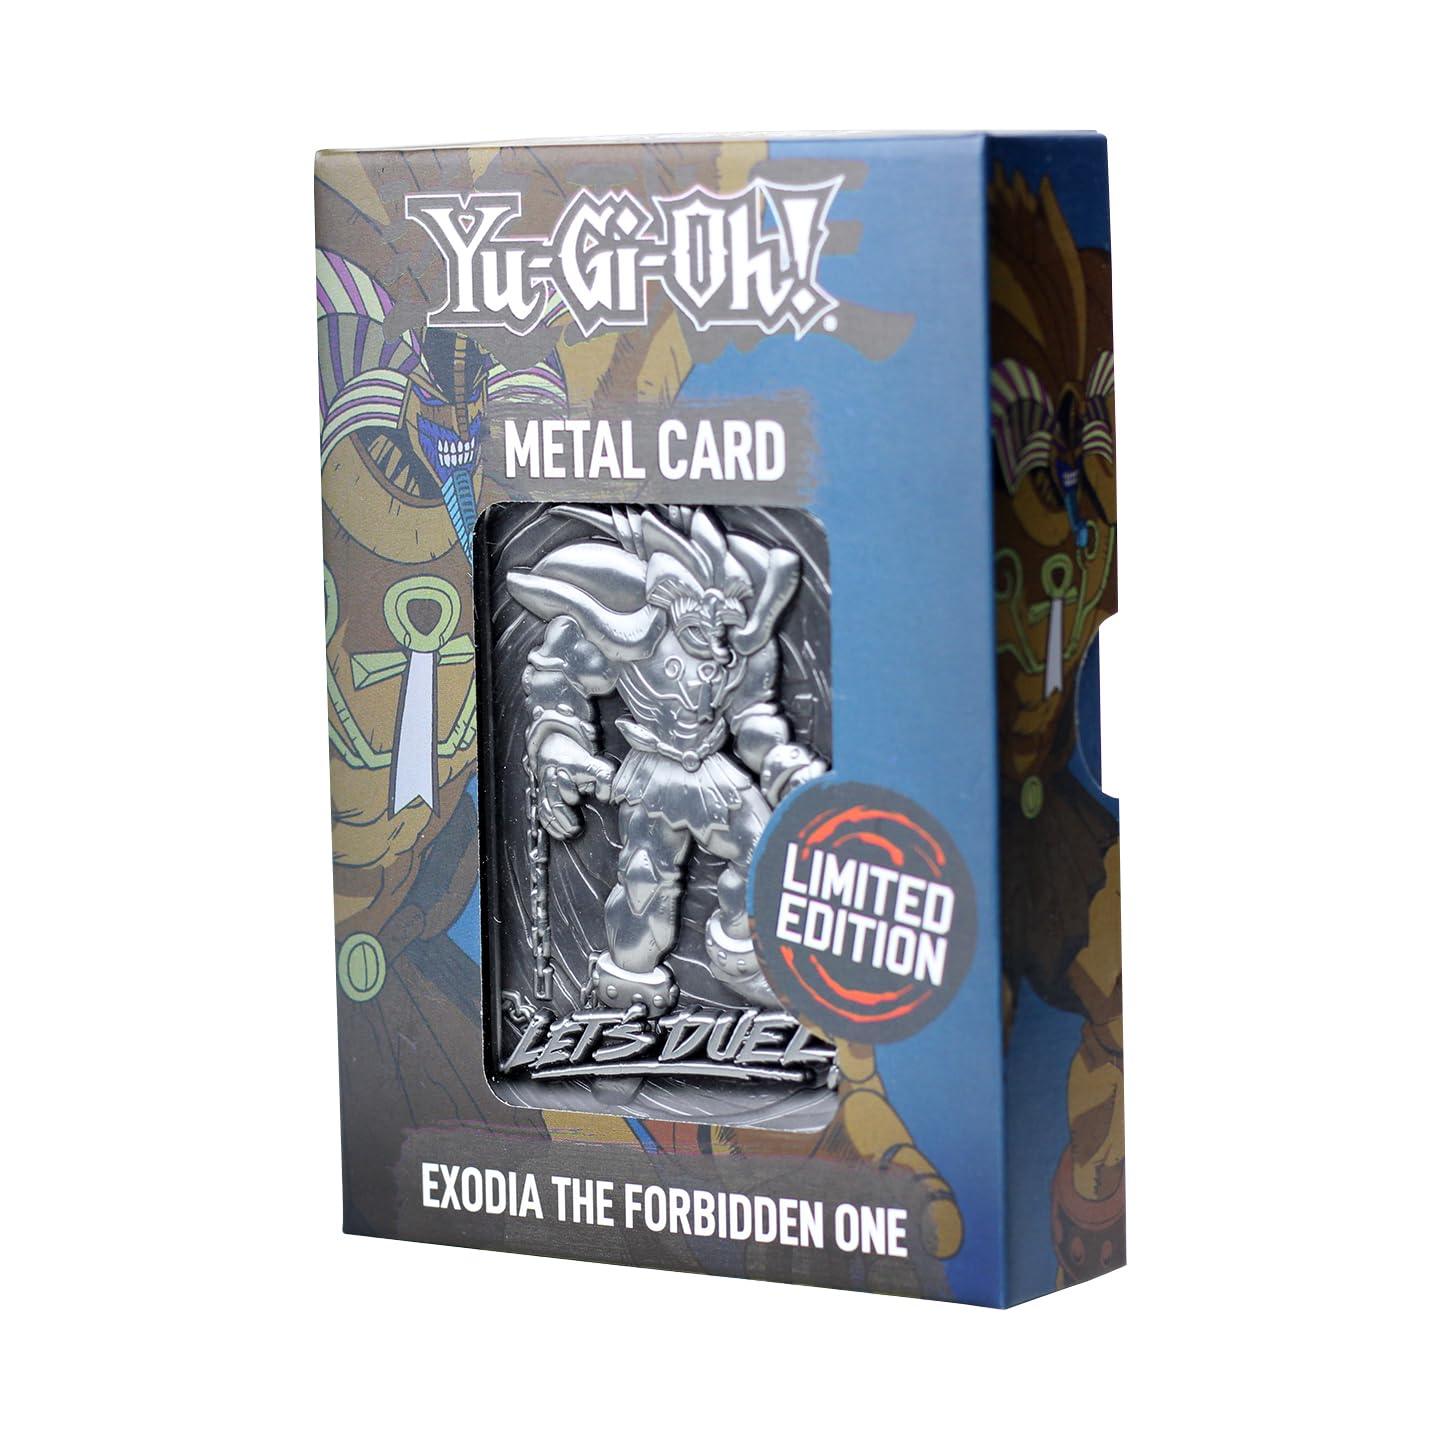 TCG - Carta in metallo pieno - Exodia The Forbidden One - Ed. Limitata Numerata 9995 pcs - ITA - YU-GI-OH! - Magic Dreams Store